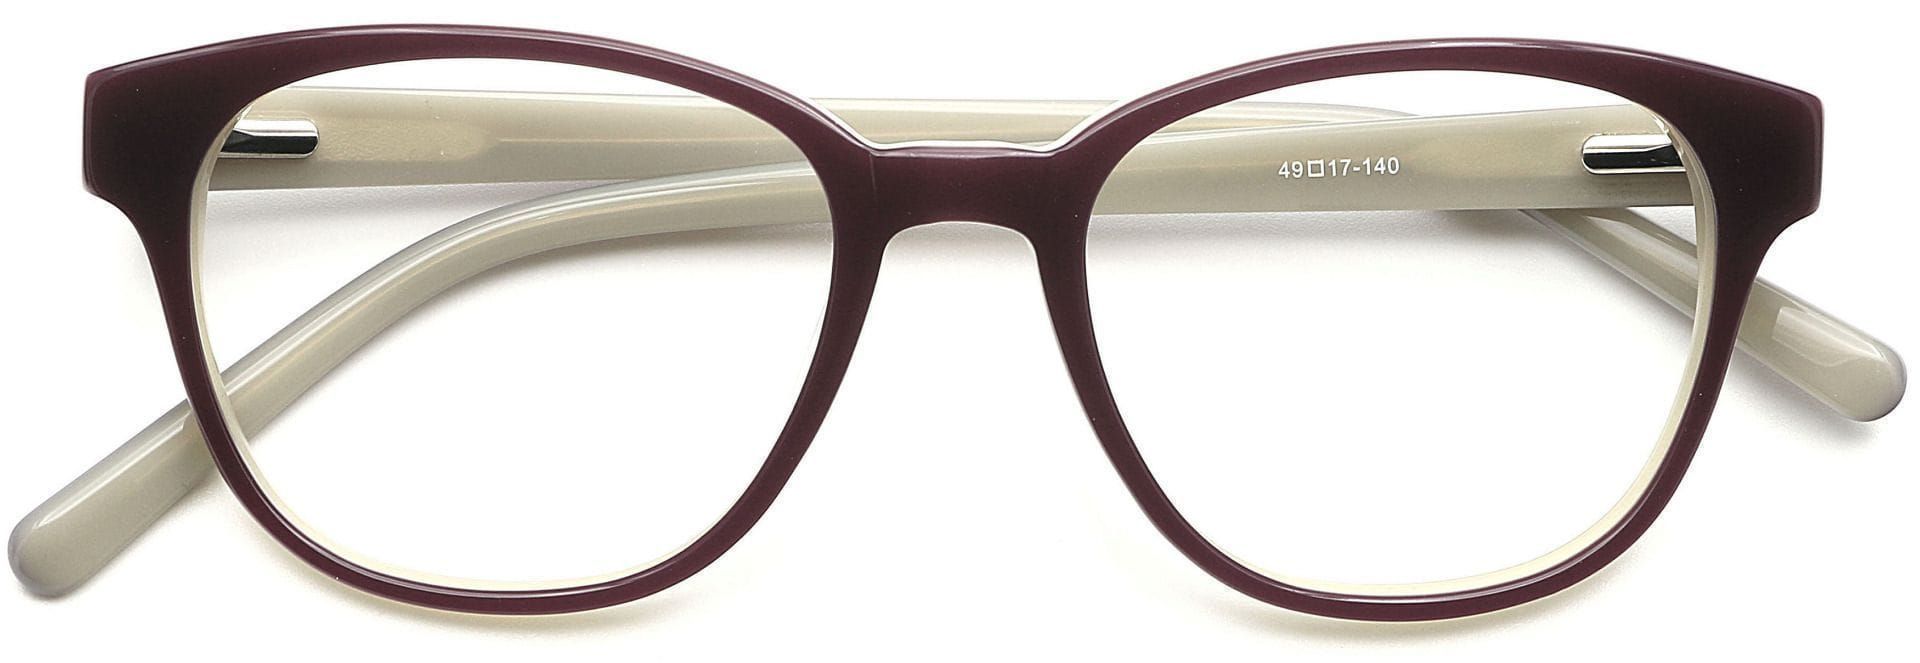 Pinnacle Classic Square Lined Bifocal Glasses - Brown